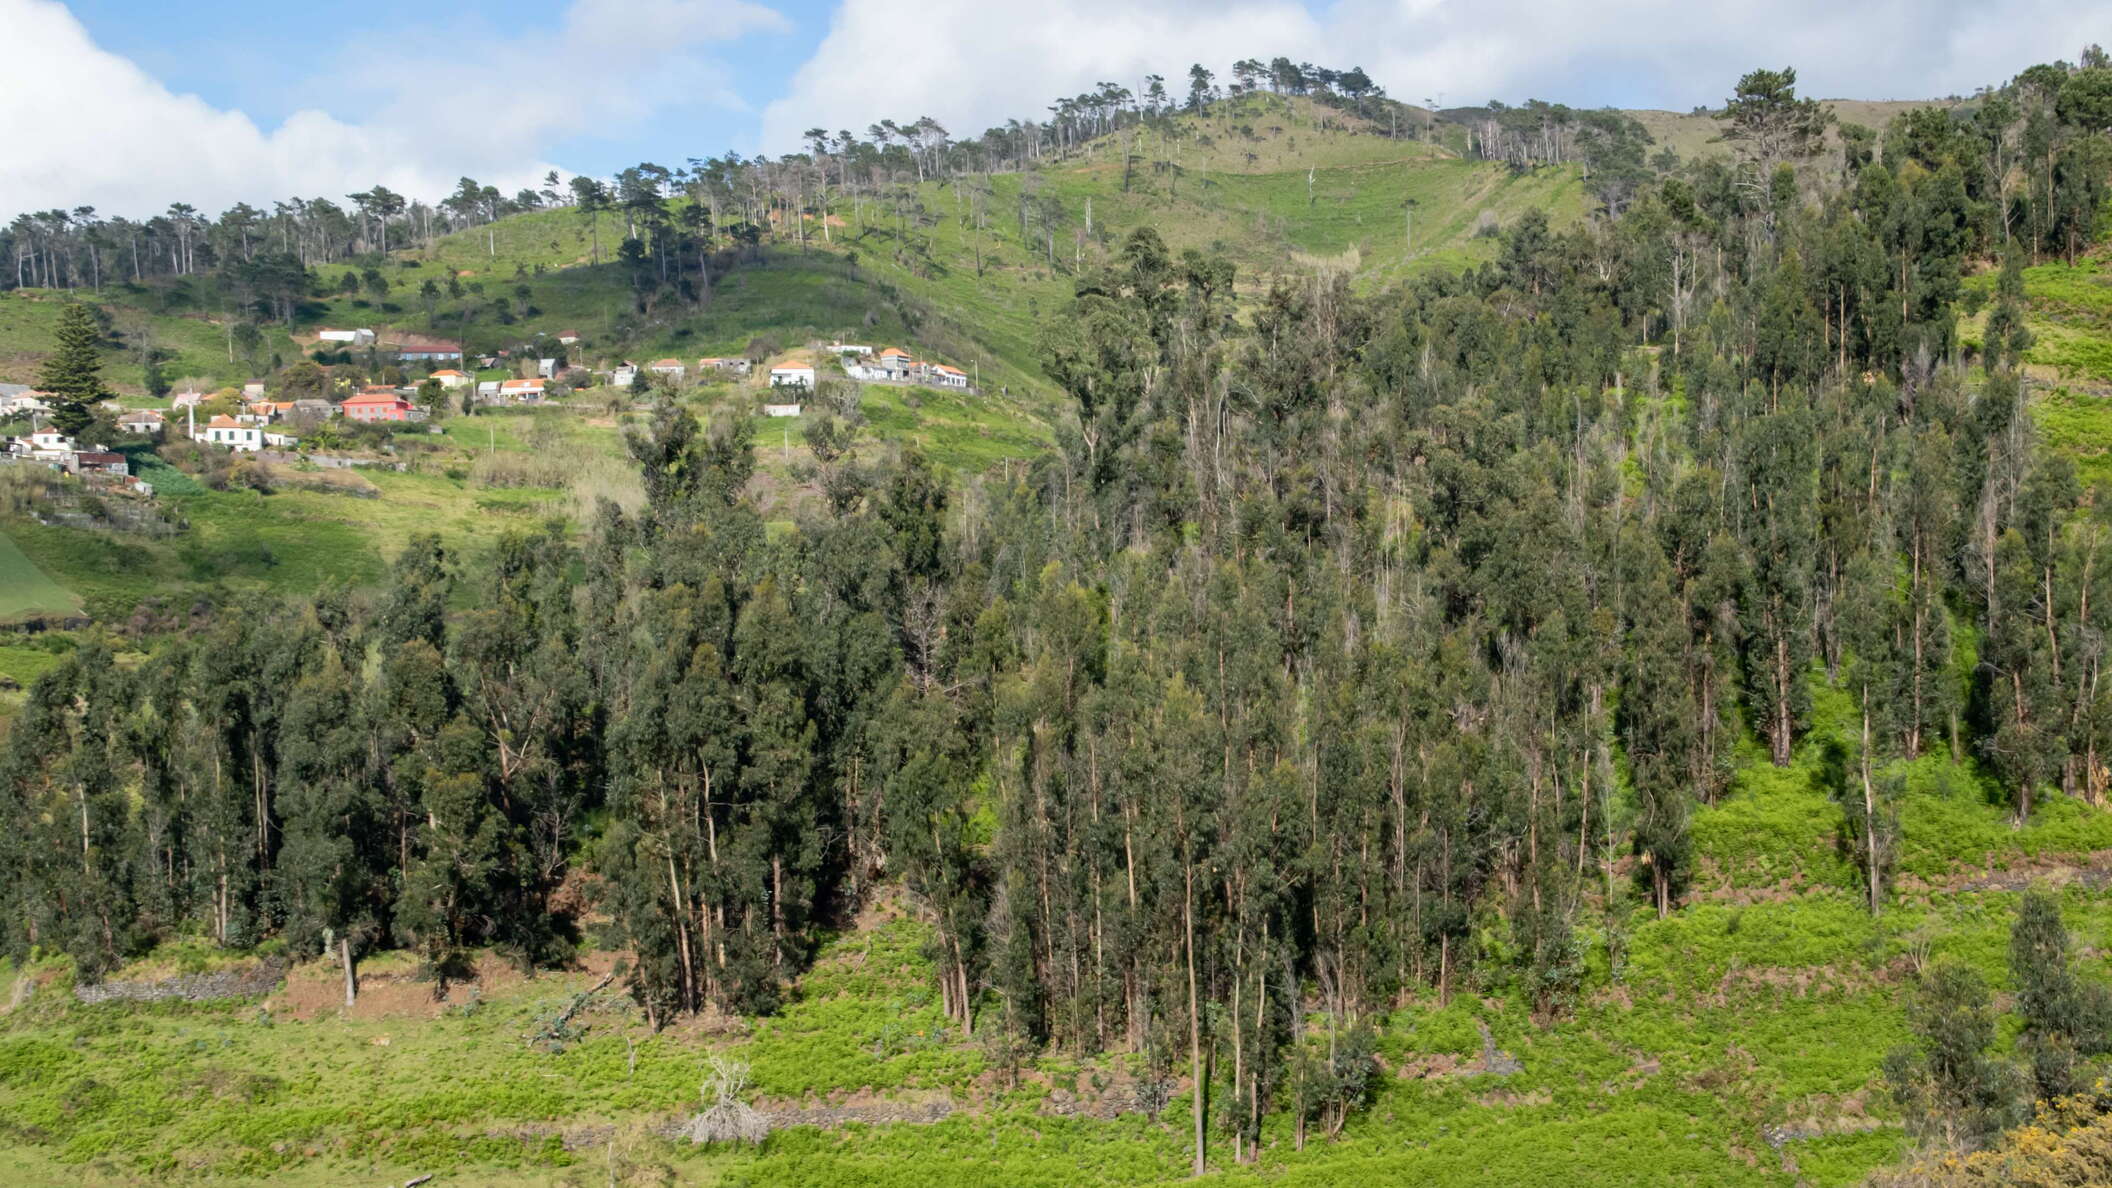 Ribeira da Vaca | Rural landscape